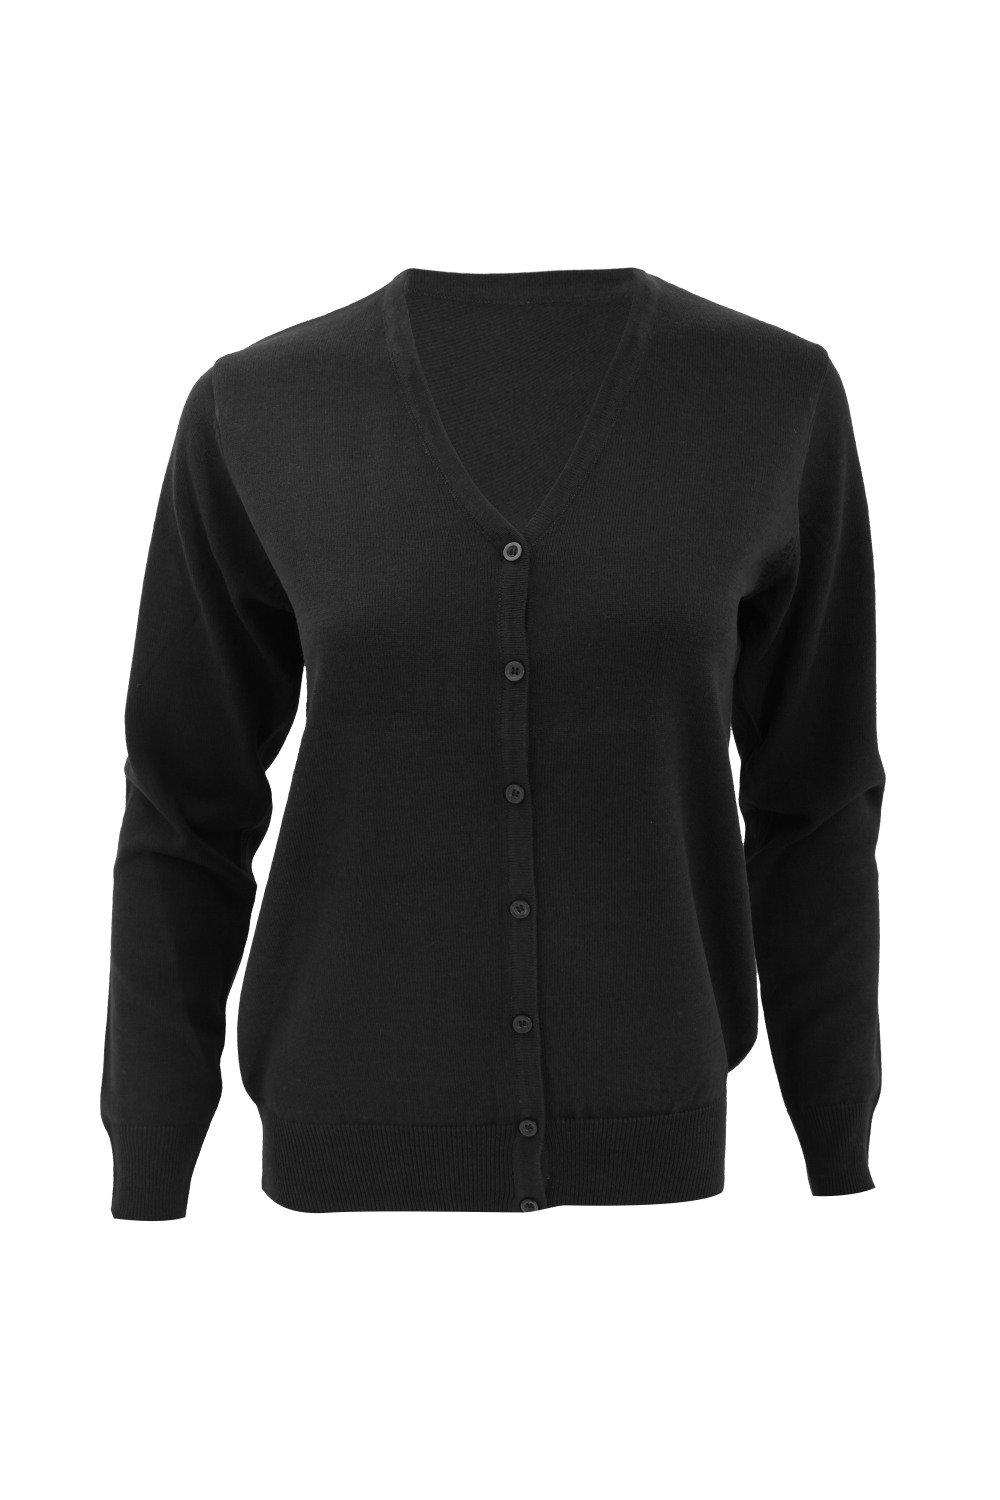 Kustom Kit Women's V-Neck Cardigan / Knitwear|Size: 14|black